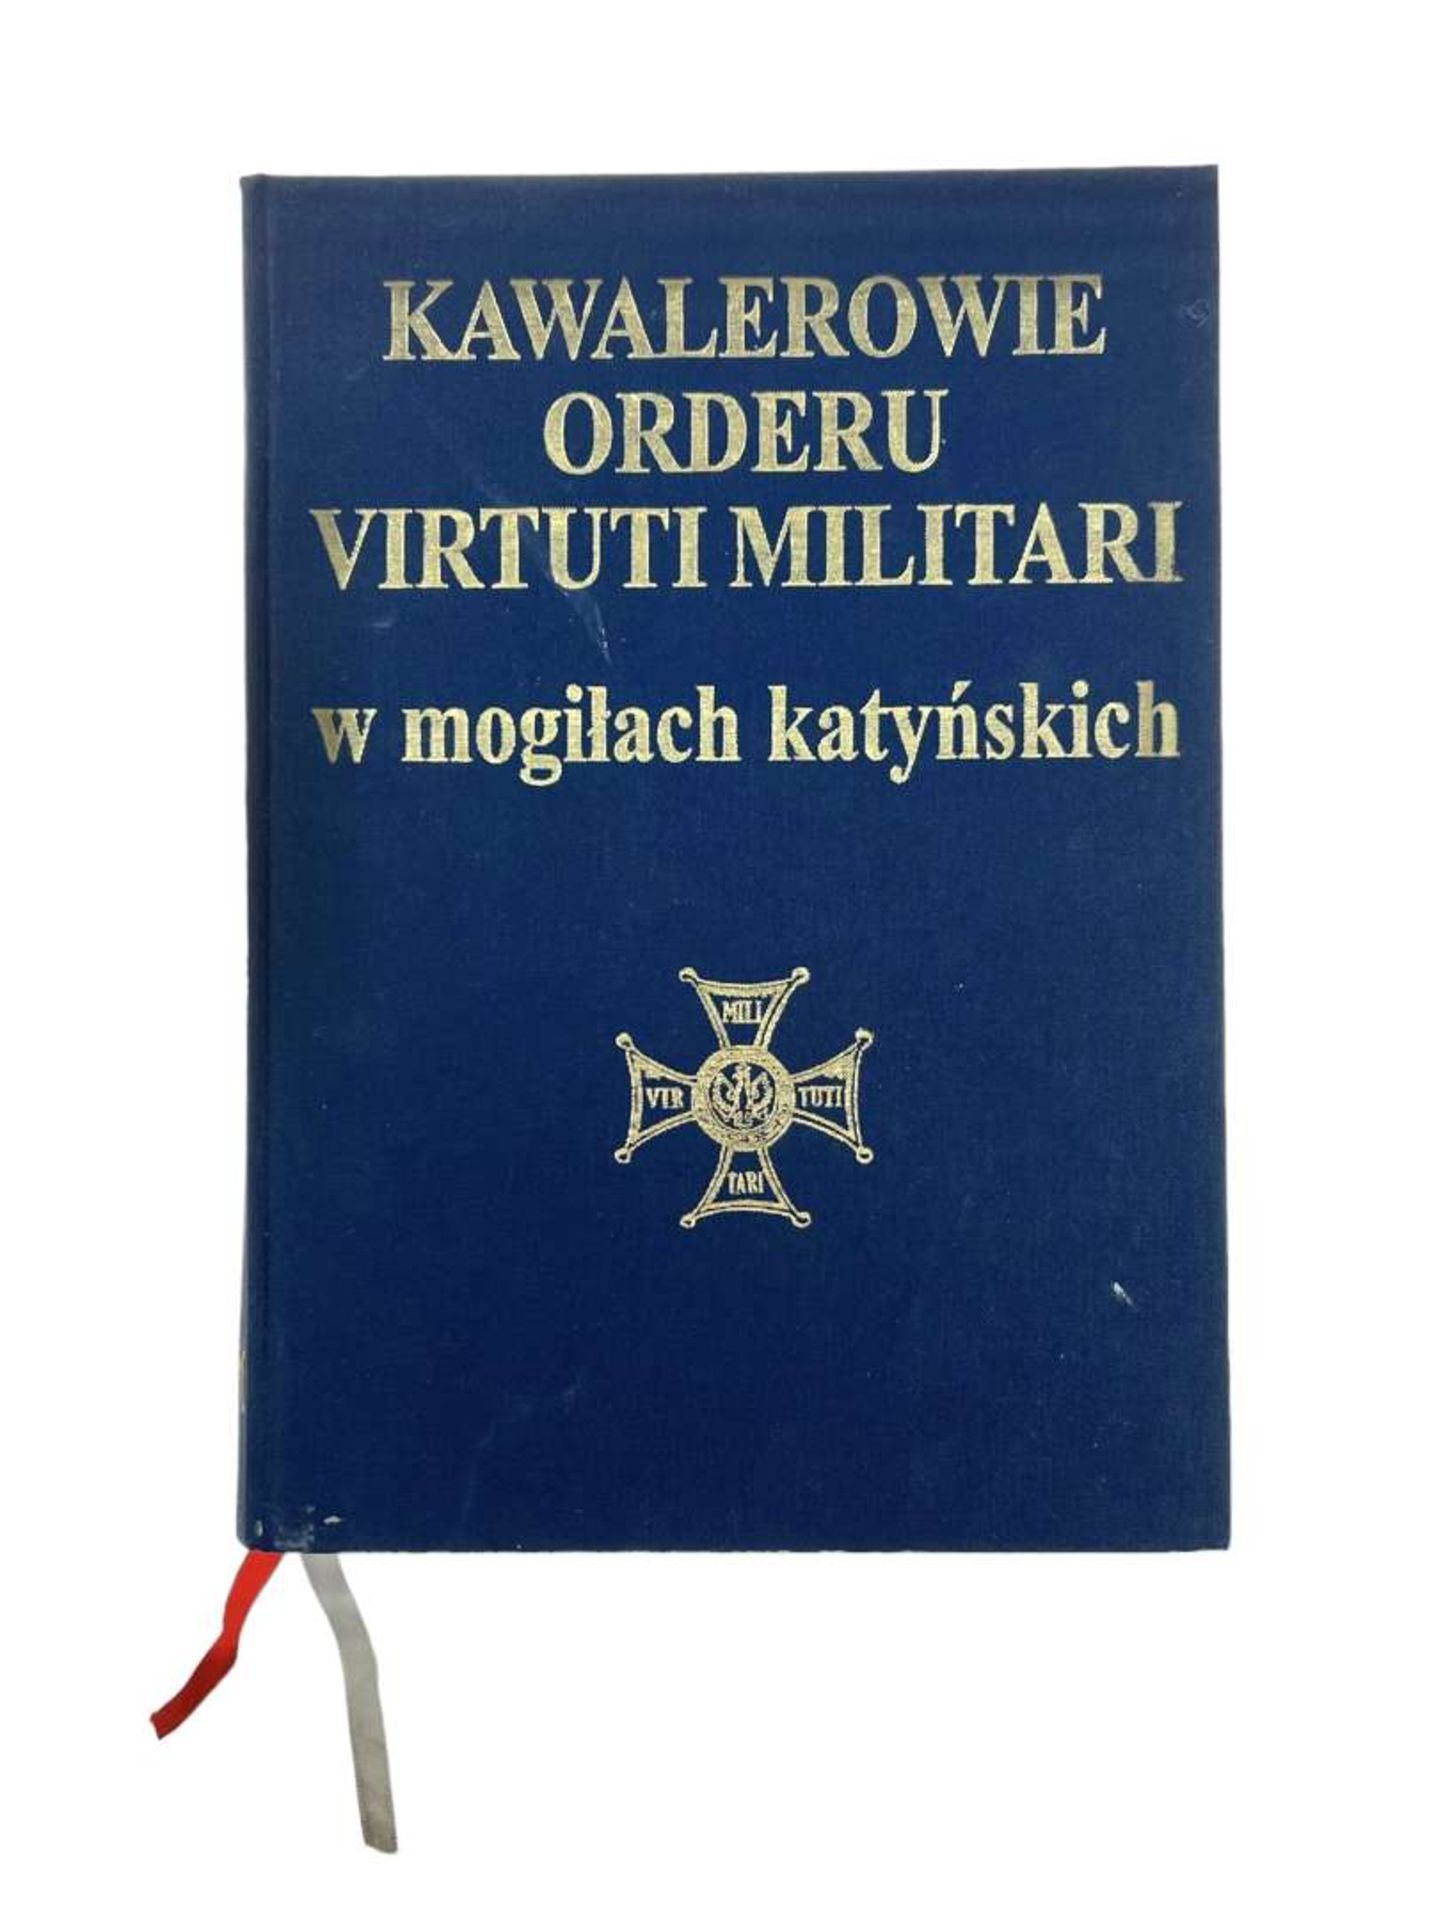 Knights of the Order of Virtuti Militari in the Katyn graves.